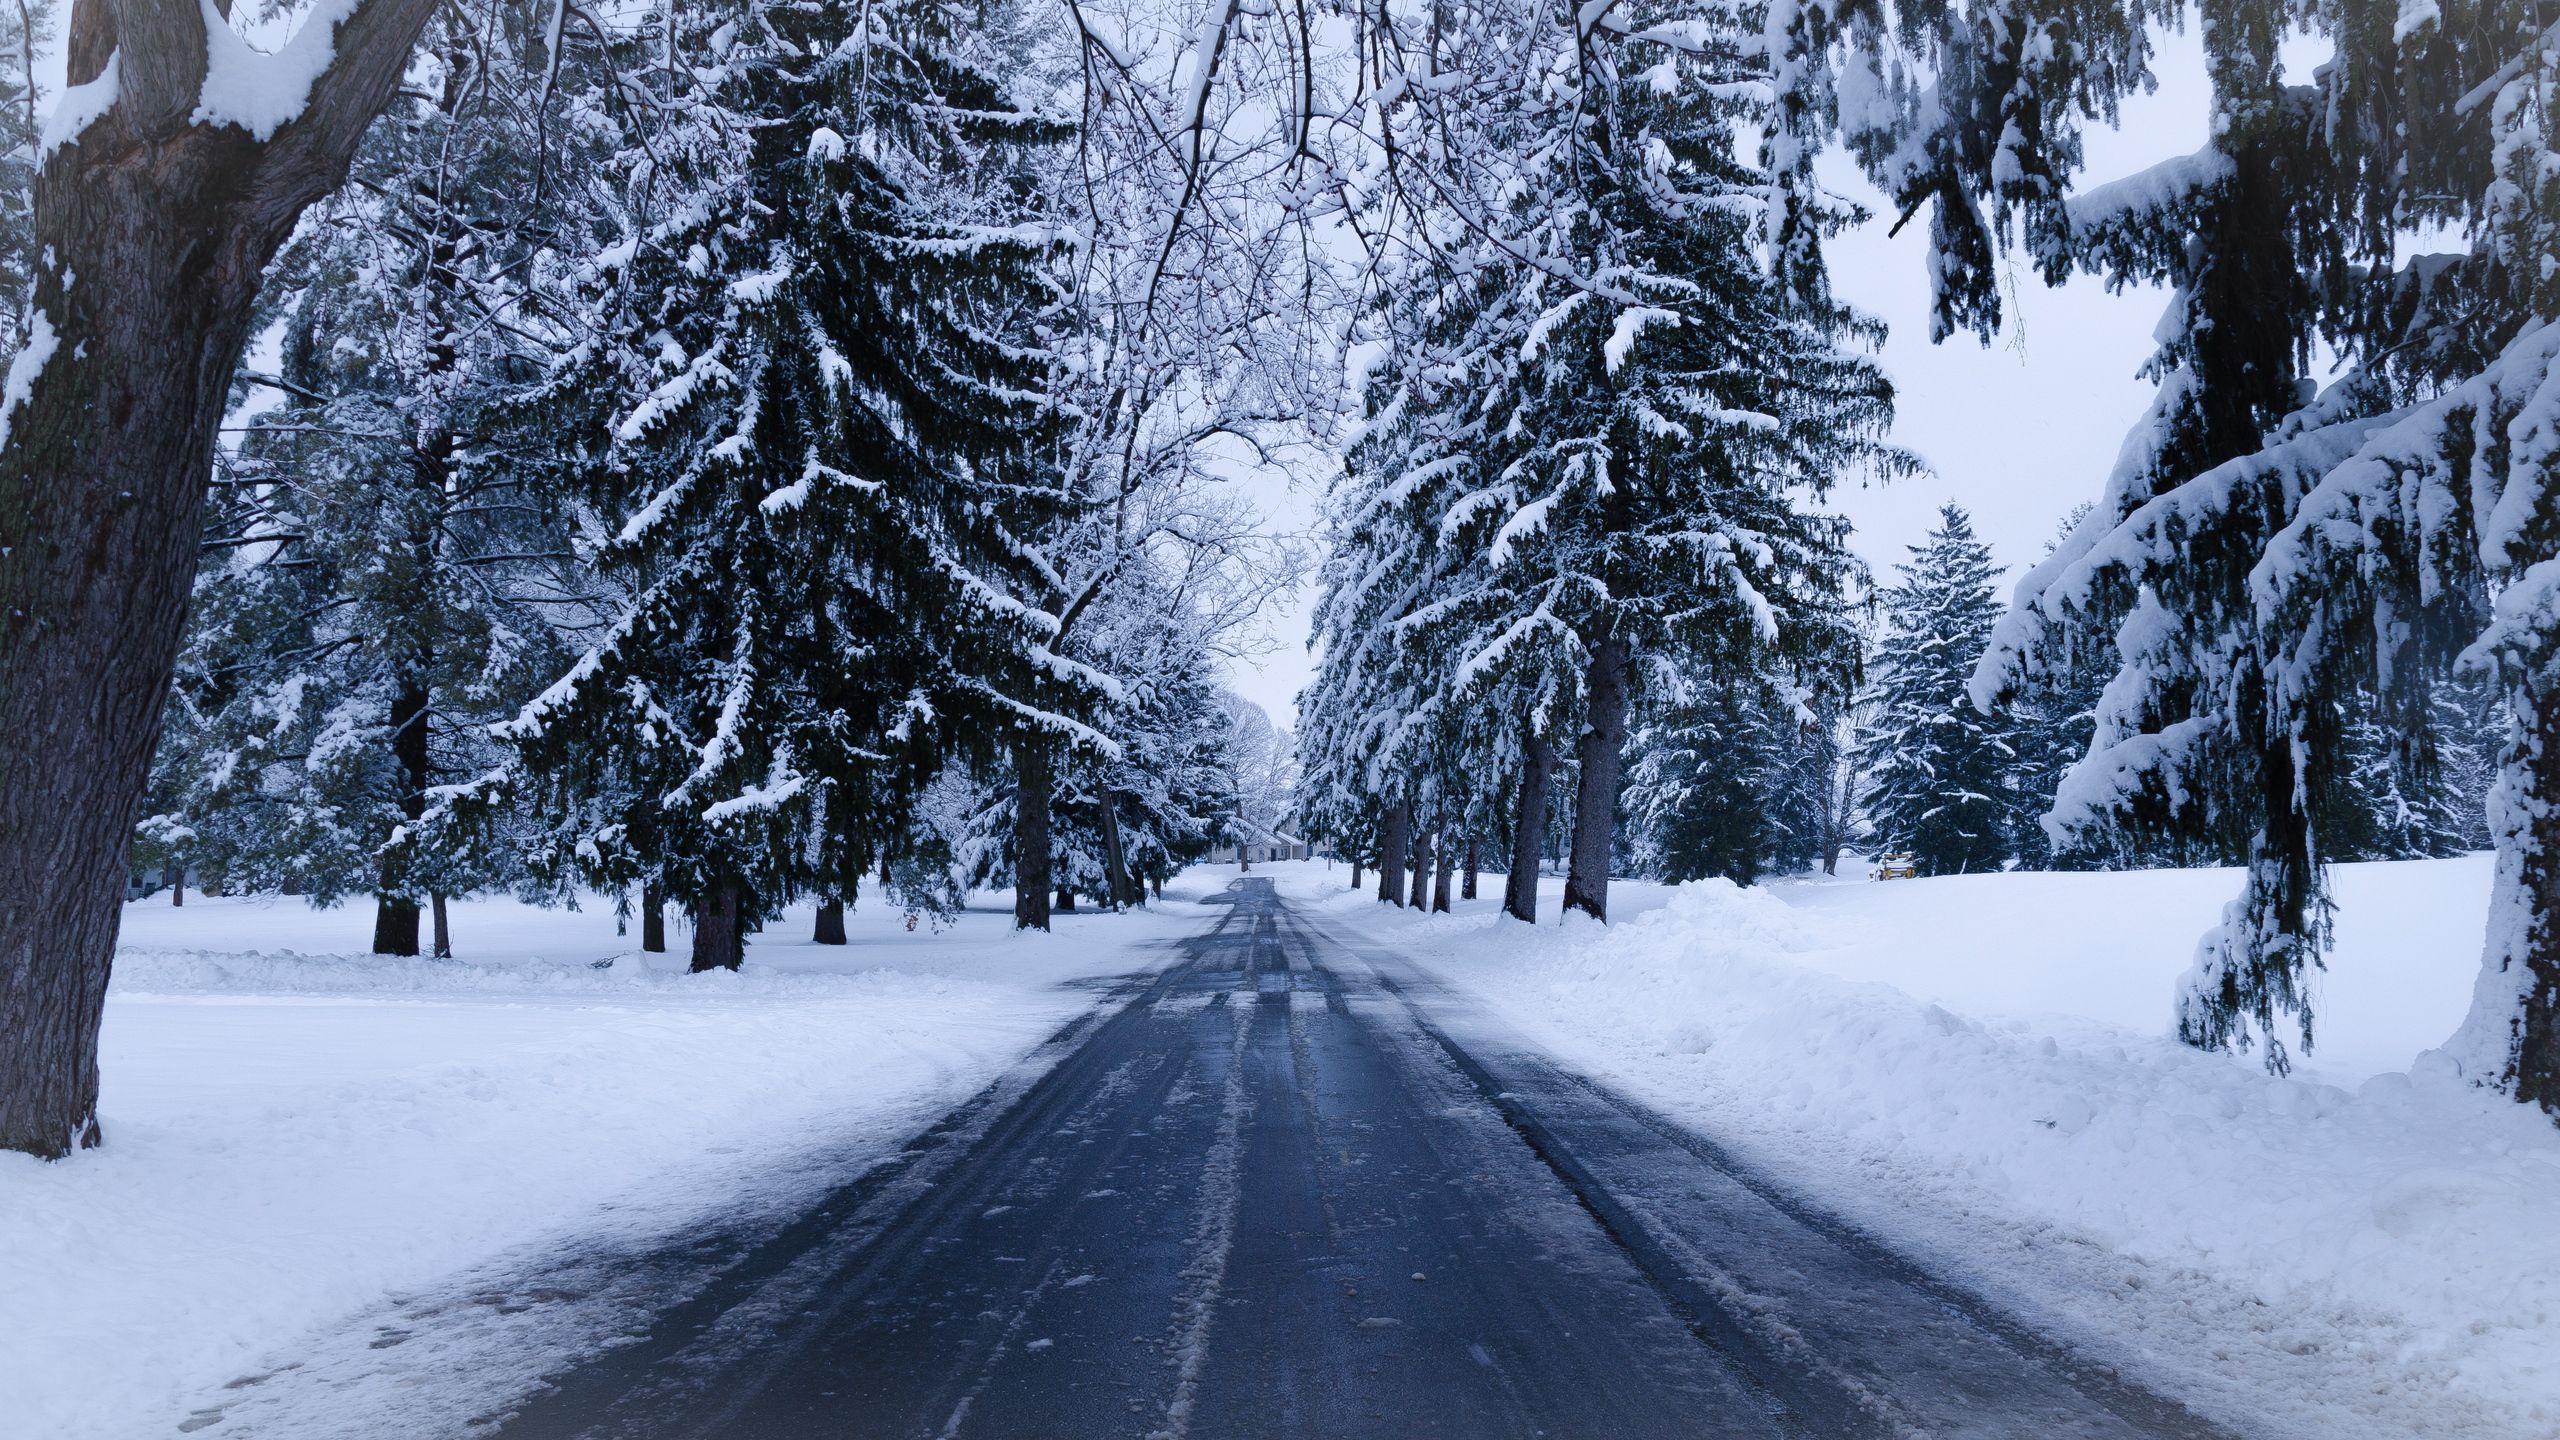 Download wallpaper 2560x1440 winter, road, snow, trees, winter